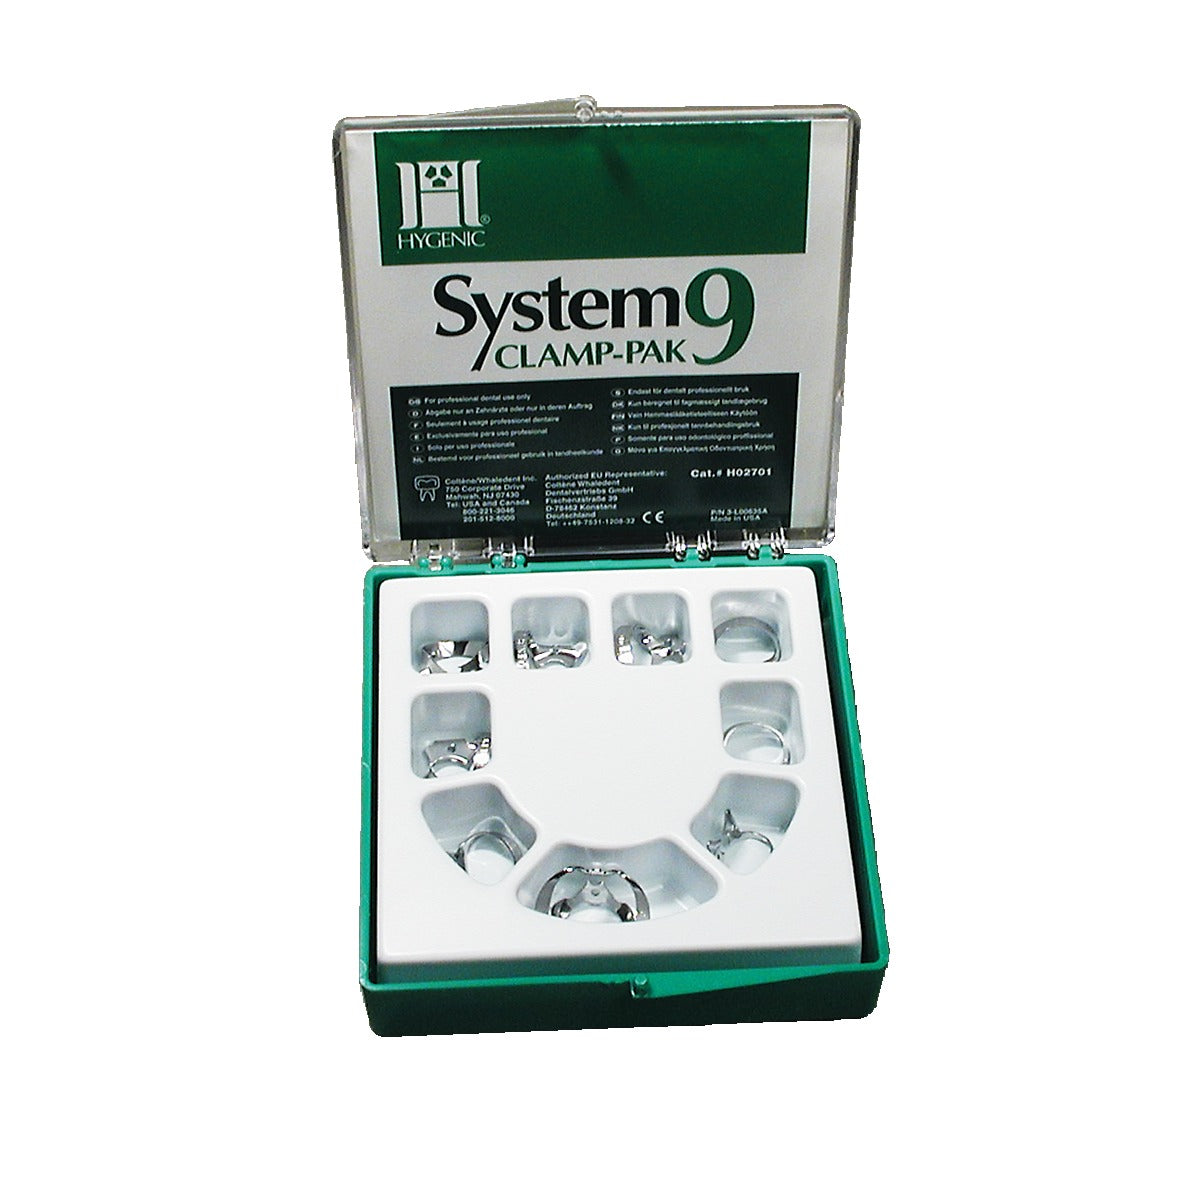 Hygenic System 9 Clamp-Pak